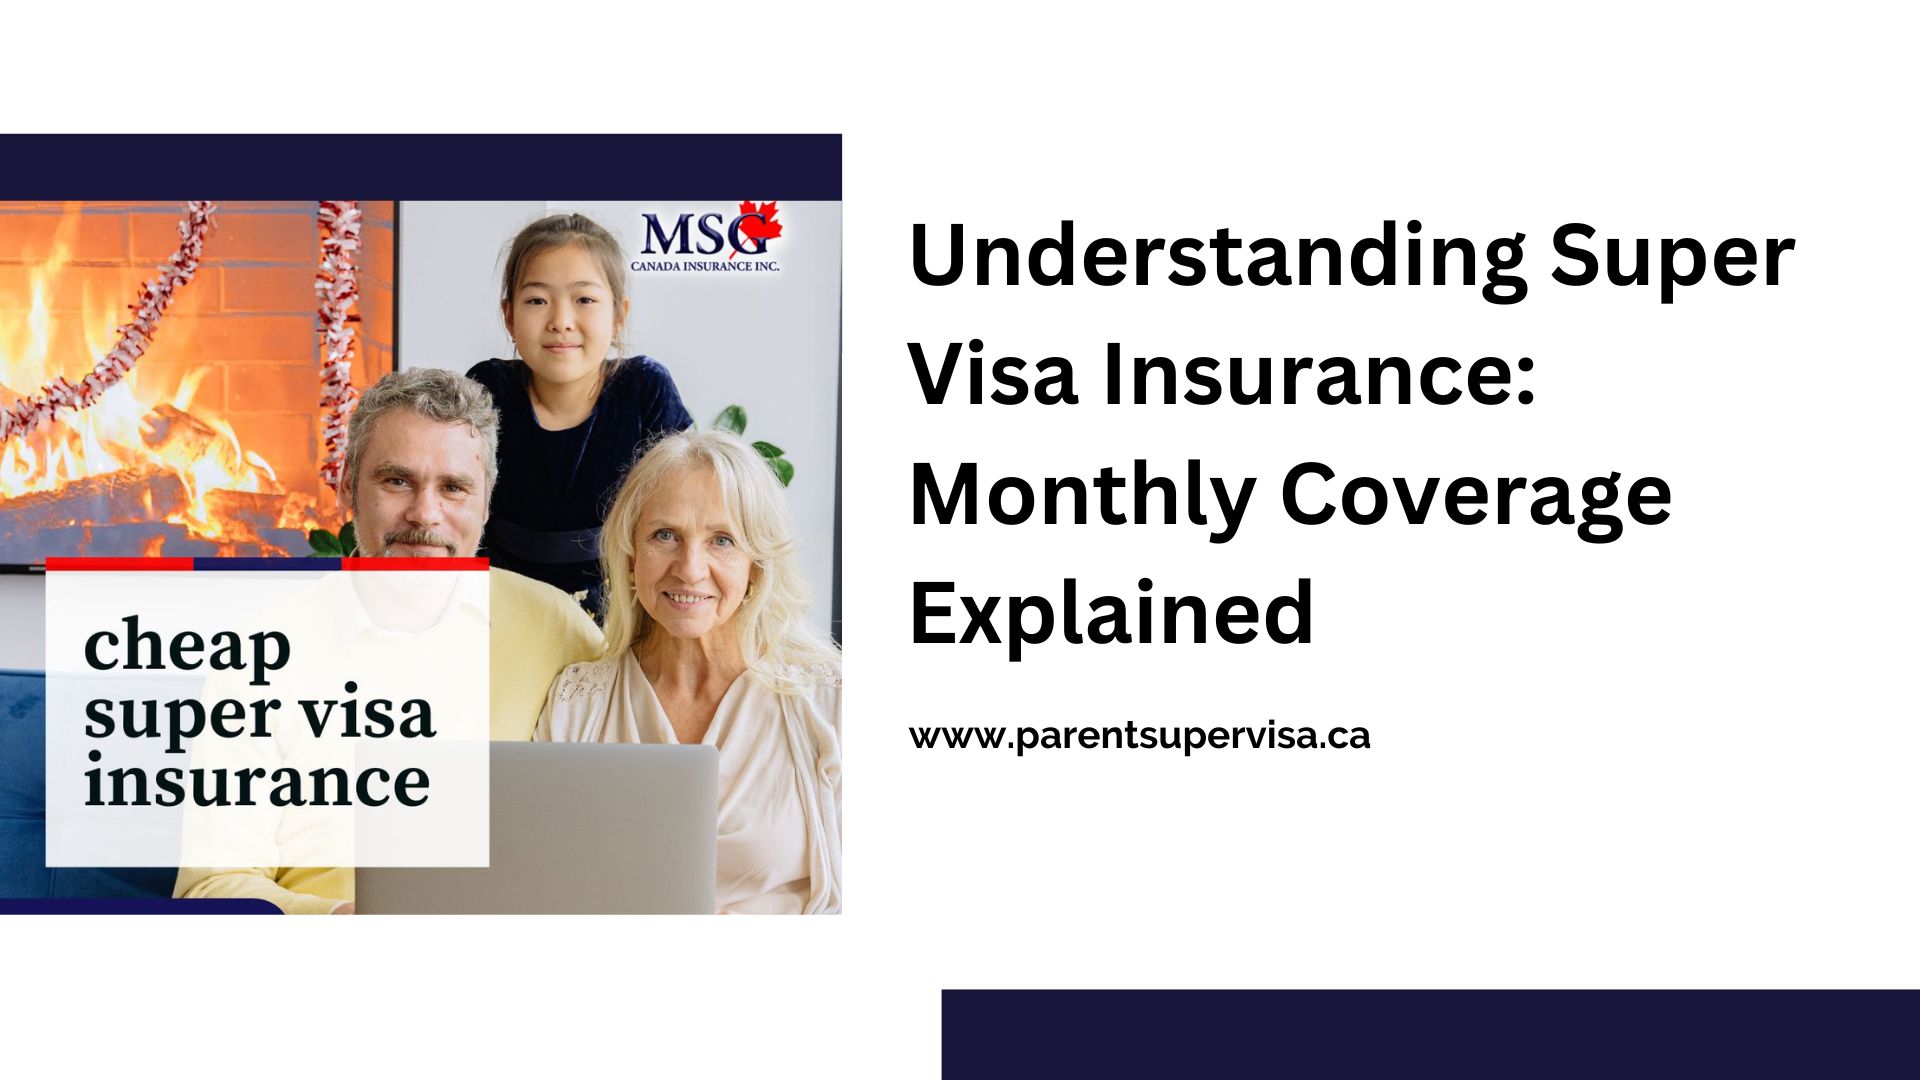 Super visa insurance monthly plan